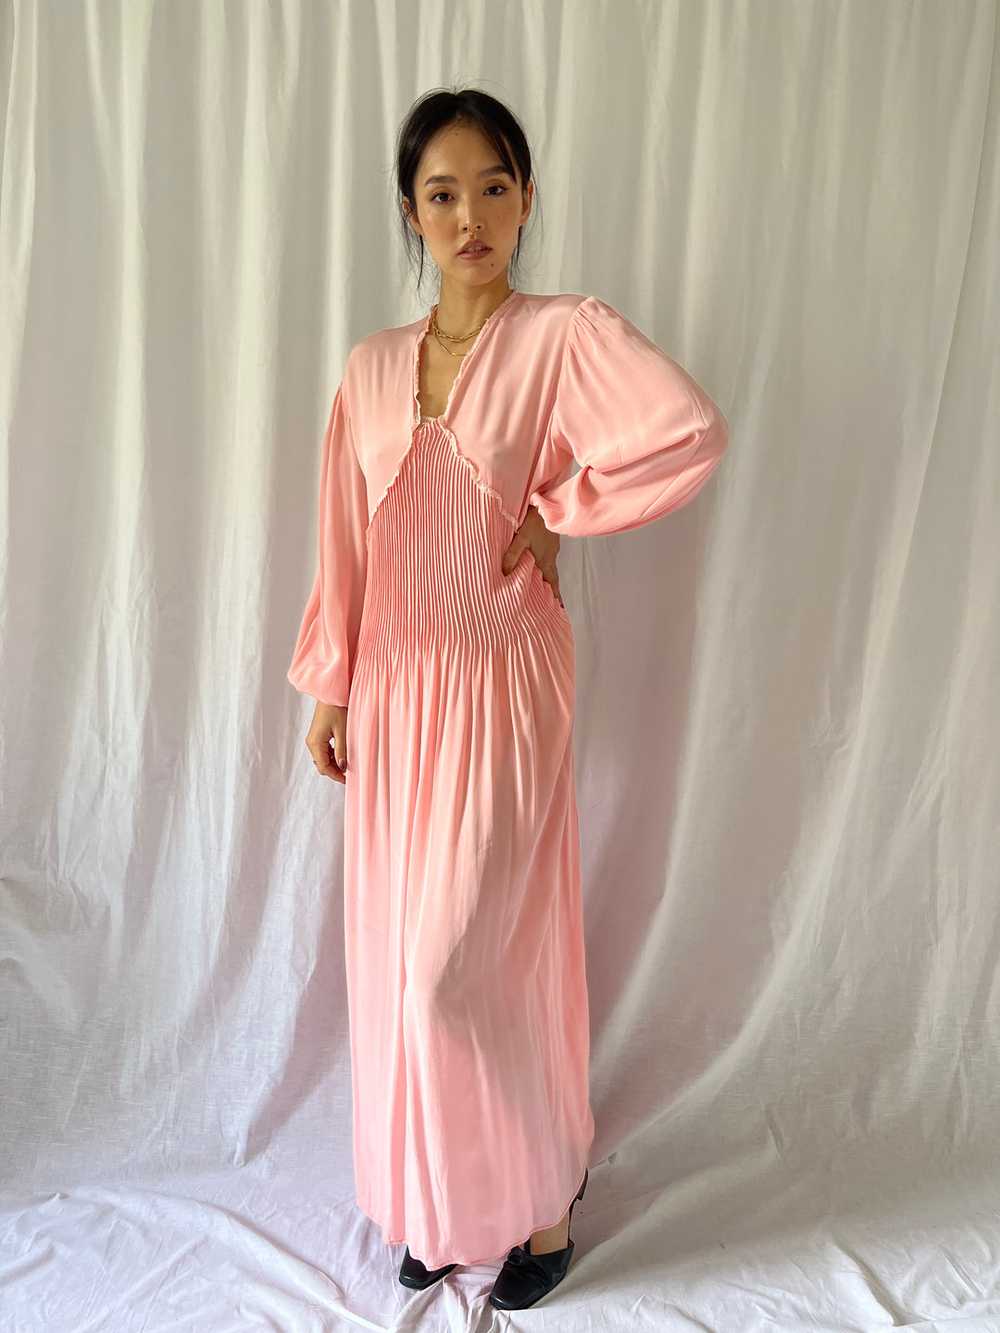 Vintage 30s pink dress long balloon sleeves - image 6